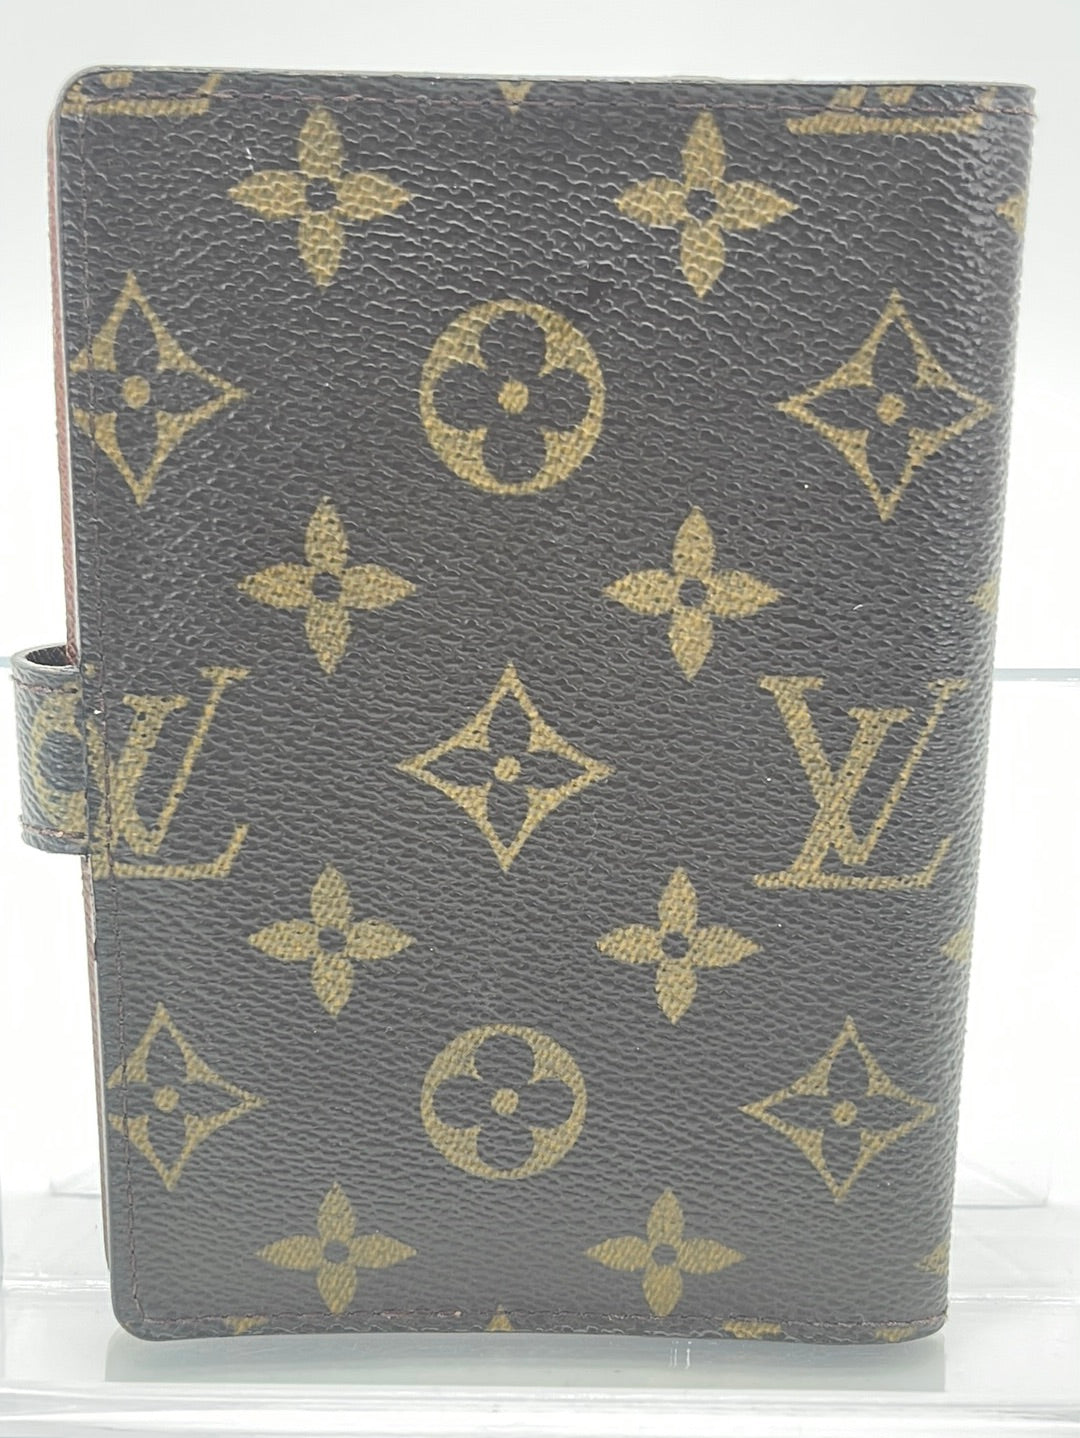 Louis Vuitton monogram suitcase with dust cover $2999 RRP $4750